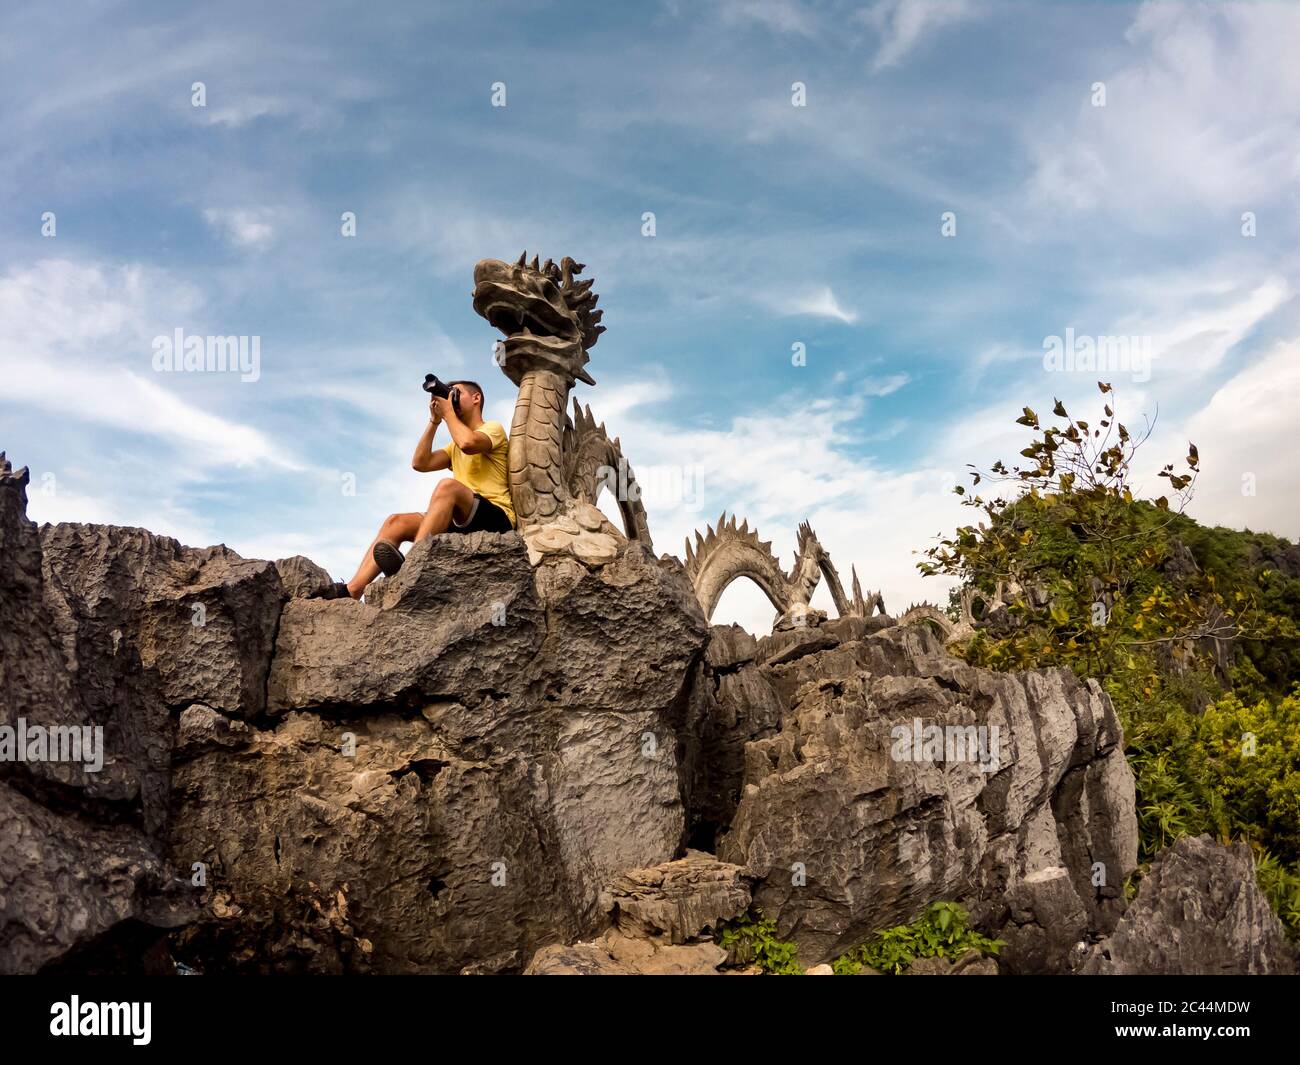 Vietnam, Ninh Binh Province, Ninh Binh, Male tourist taking photos in front of dragon sculpture Stock Photo